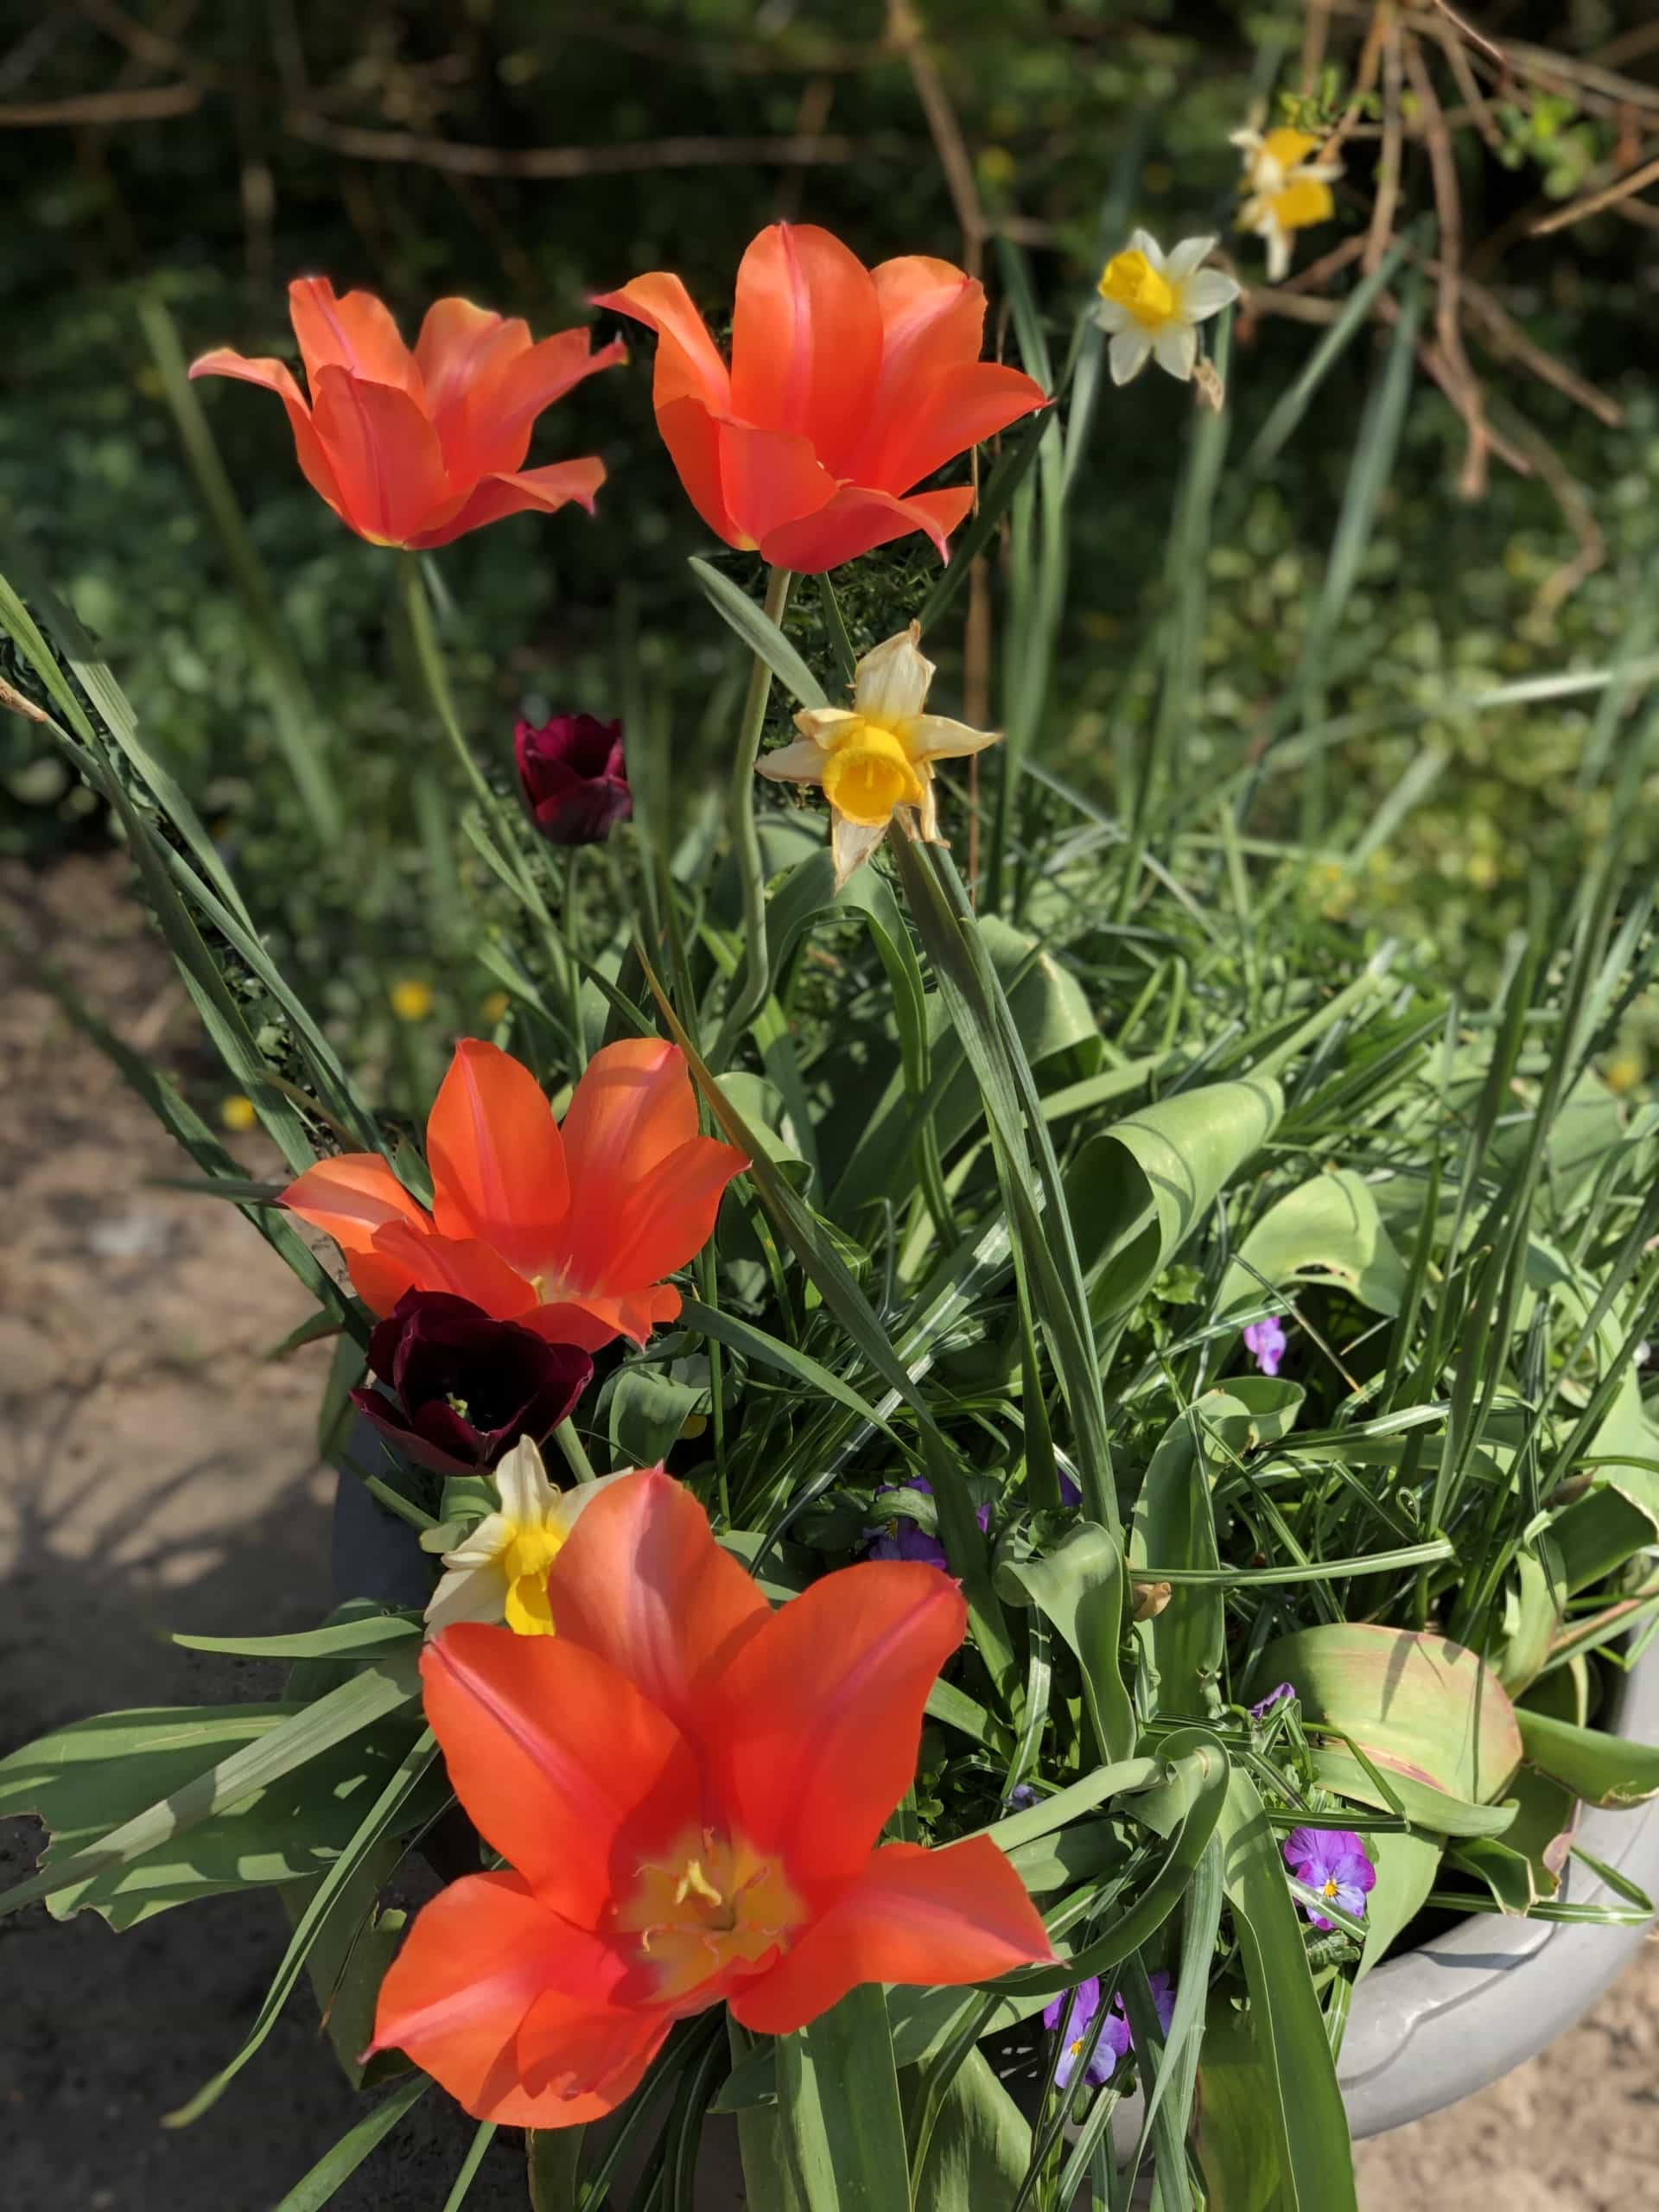 Tulips2